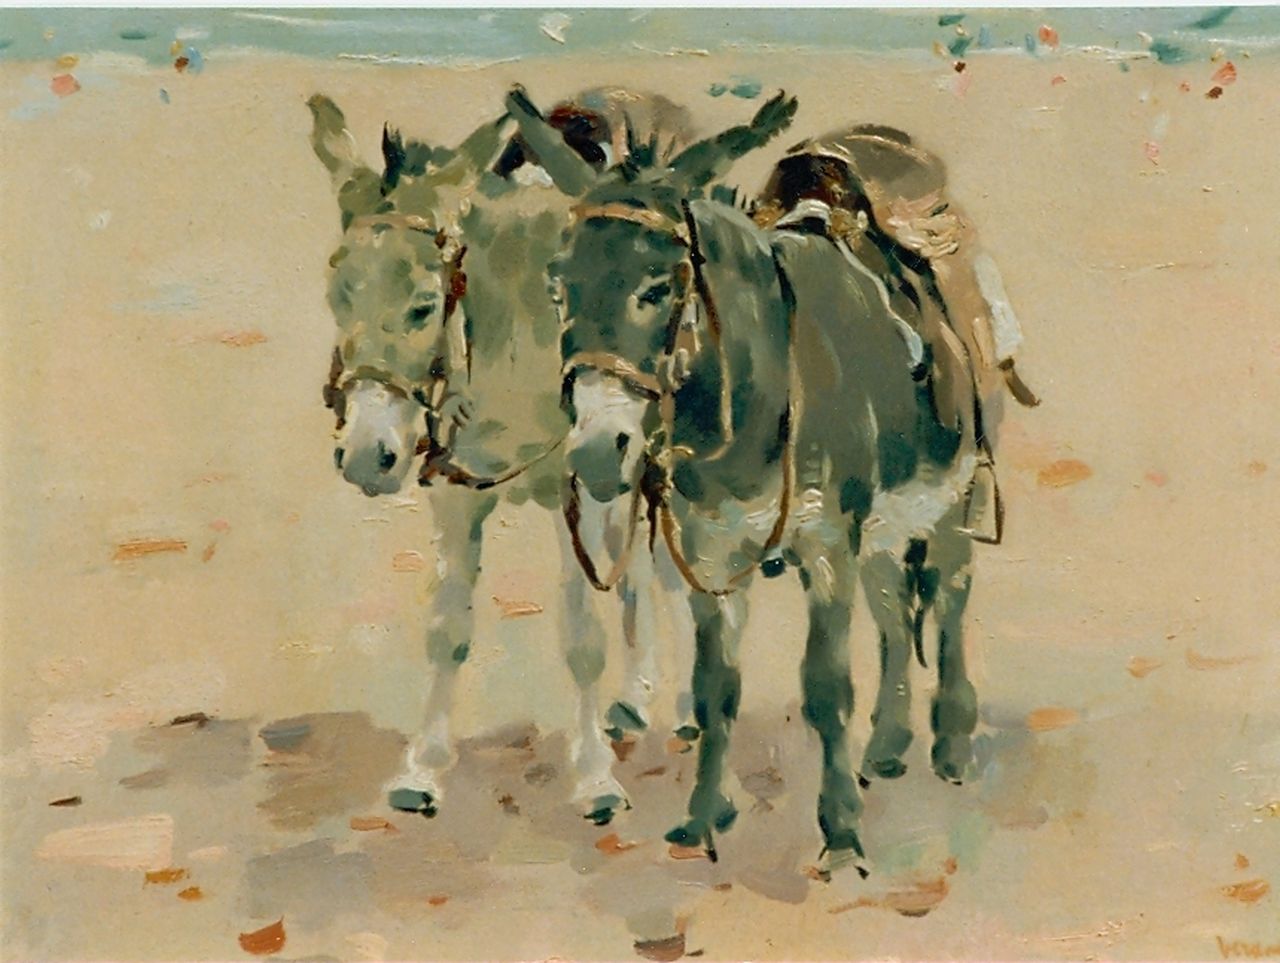 Verdonk F.W.  | Frederik Willem 'Frits' Verdonk, Donkies on the beach, Öl auf Holz 34,2 x 47,3 cm, signed l.r.